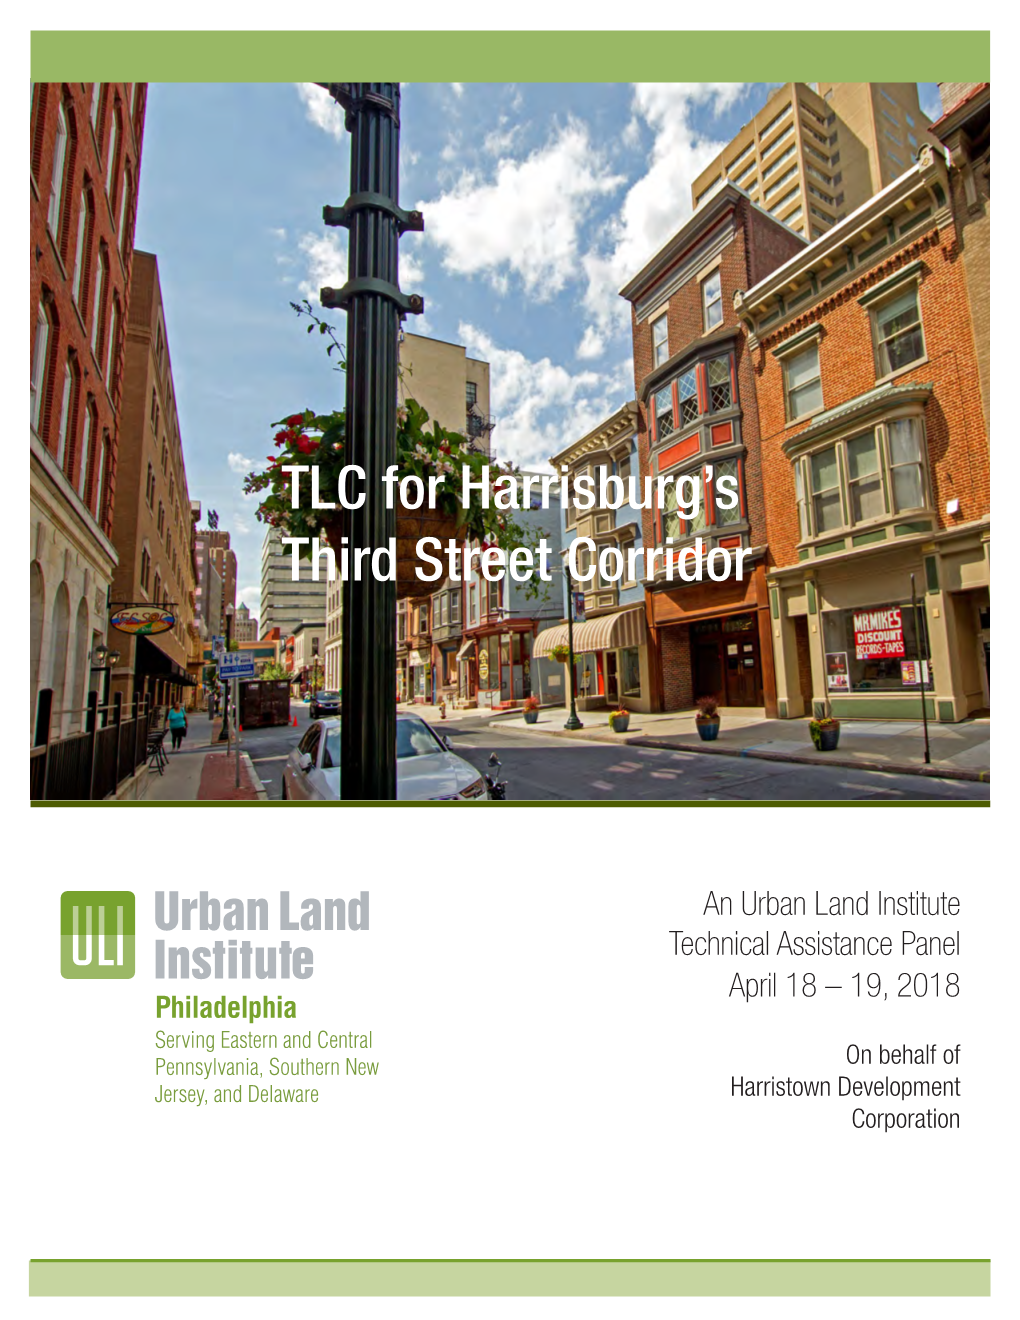 TLC for Harrisburg's Third Street Corridor